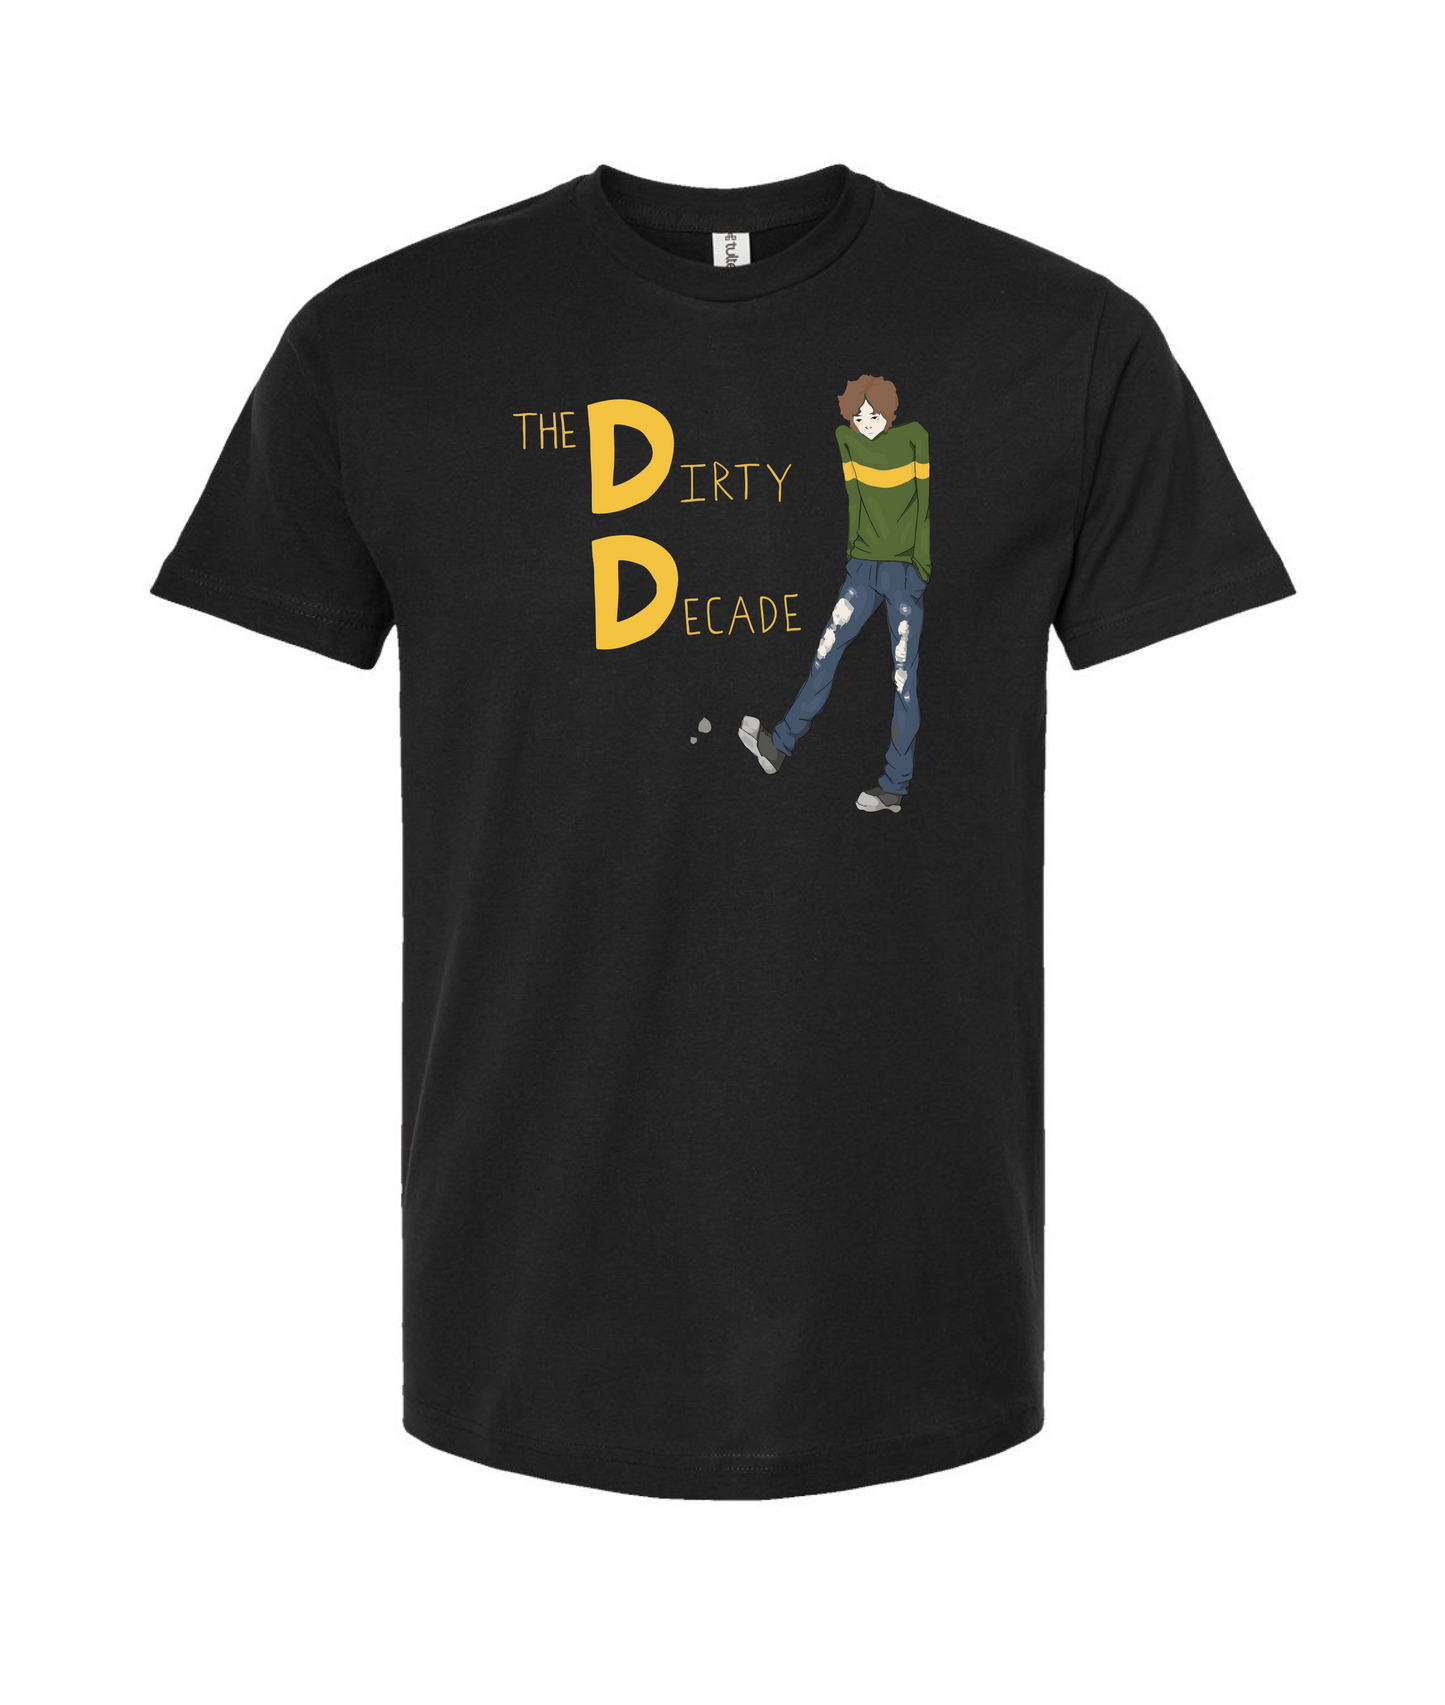 The Dirty Decade - Kicking Rocks - Black T-Shirt